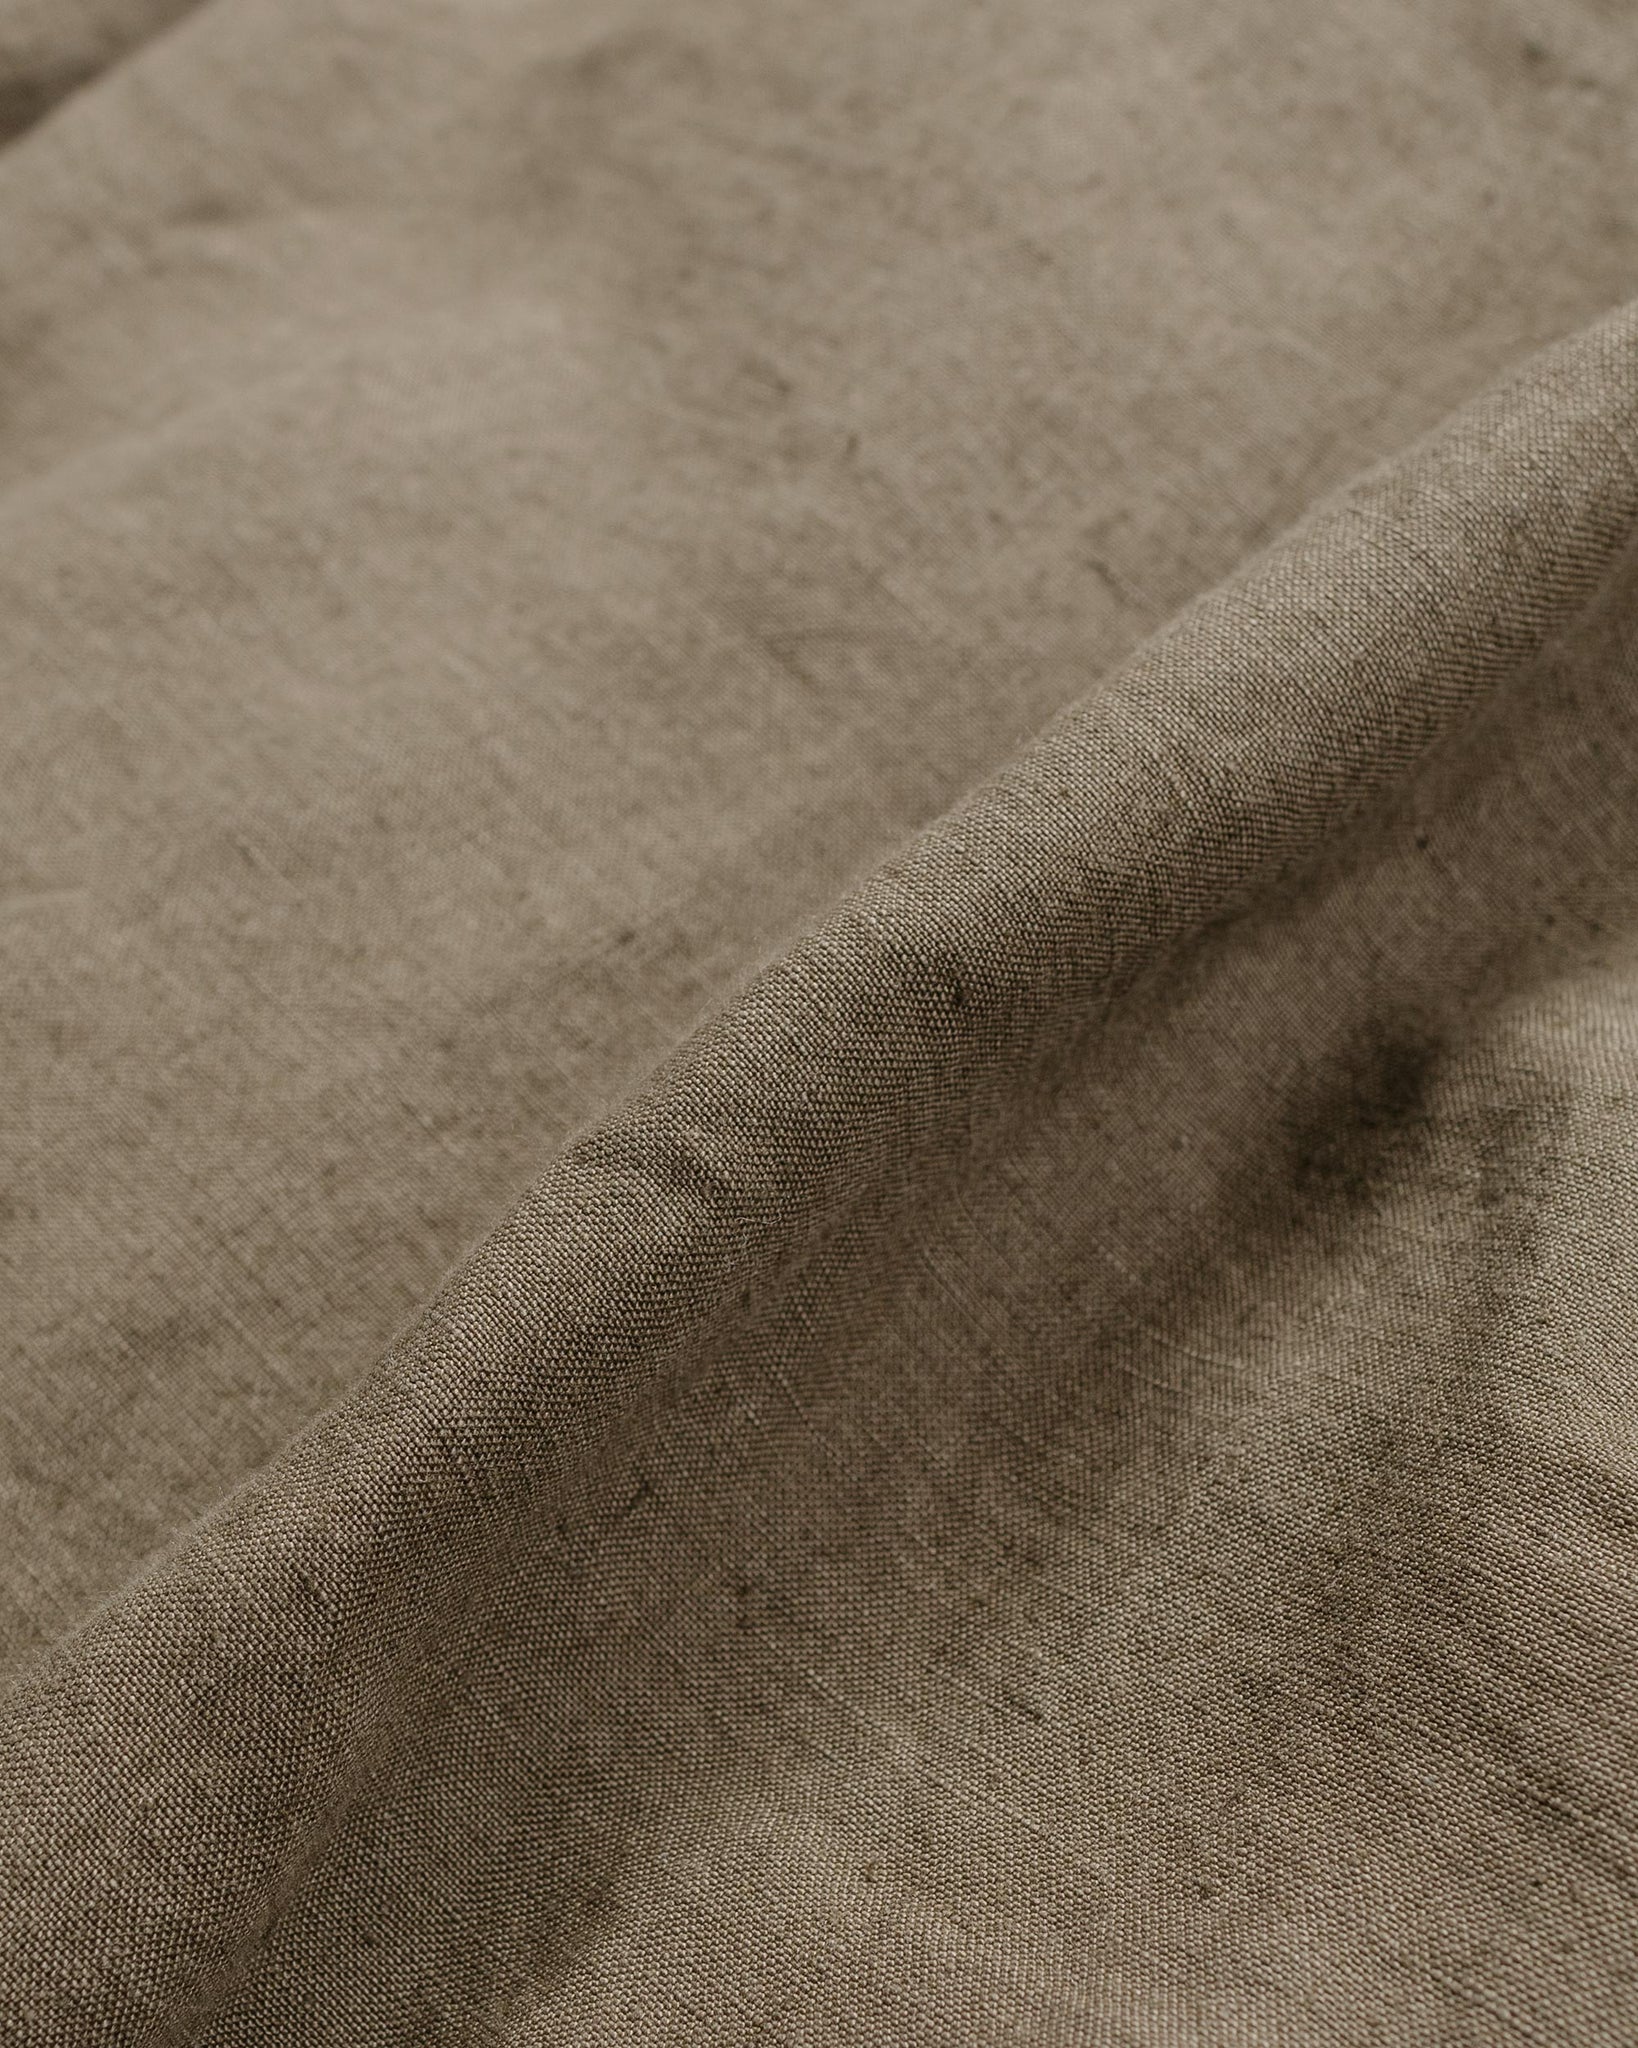 James Coward Workshop Shirt Olive Stonewashed Linen Fabric